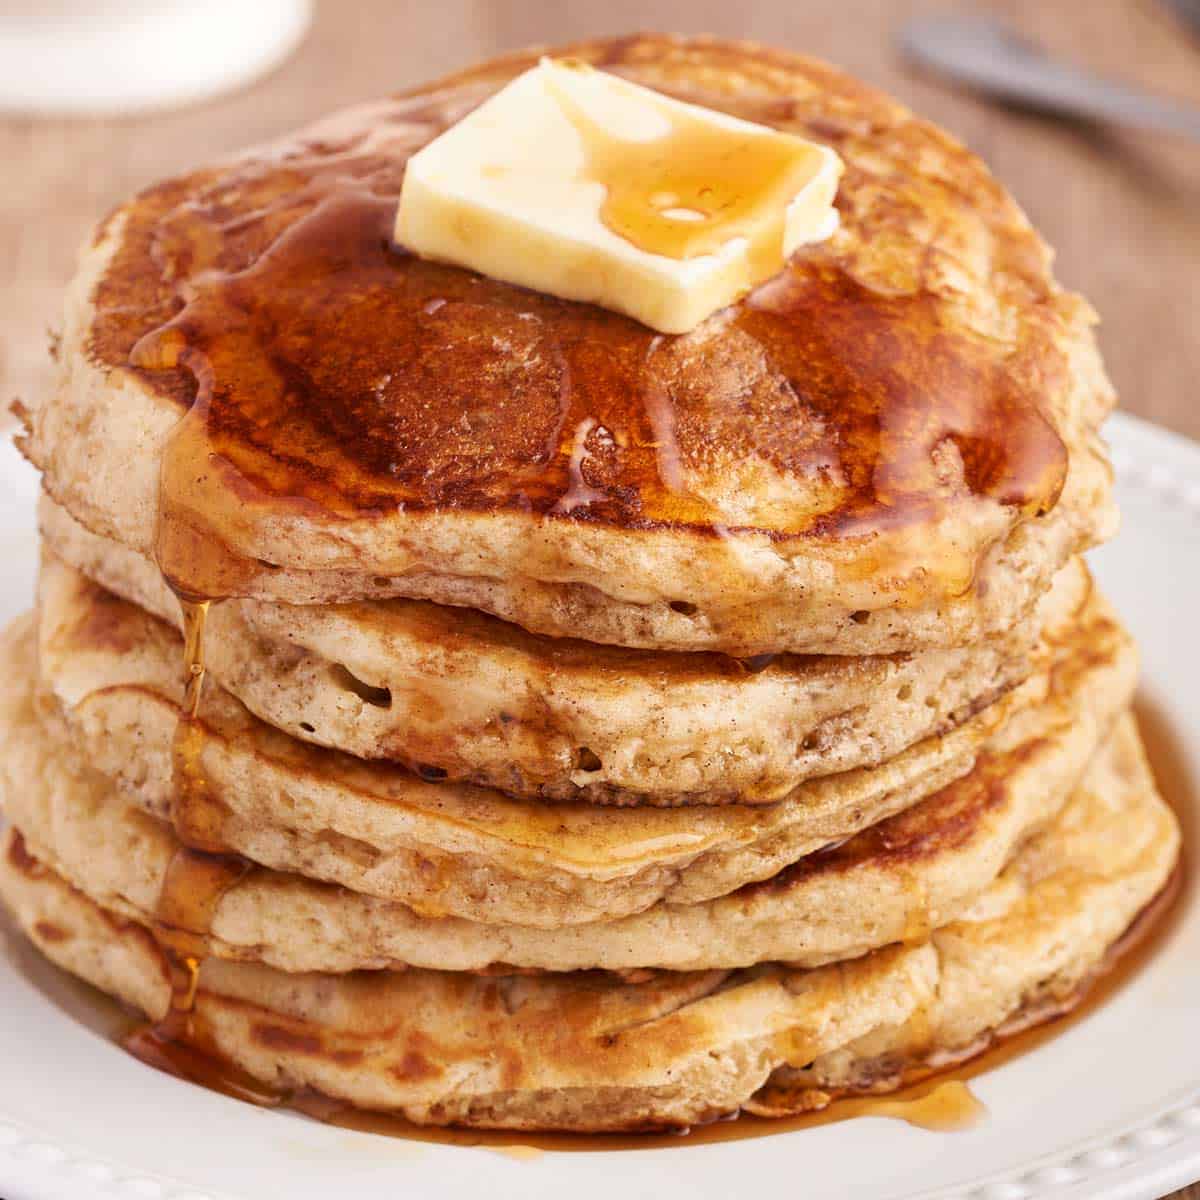 https://www.thechunkychef.com/wp-content/uploads/2021/05/Buttermilk-Pancakes-recipe-card.jpg